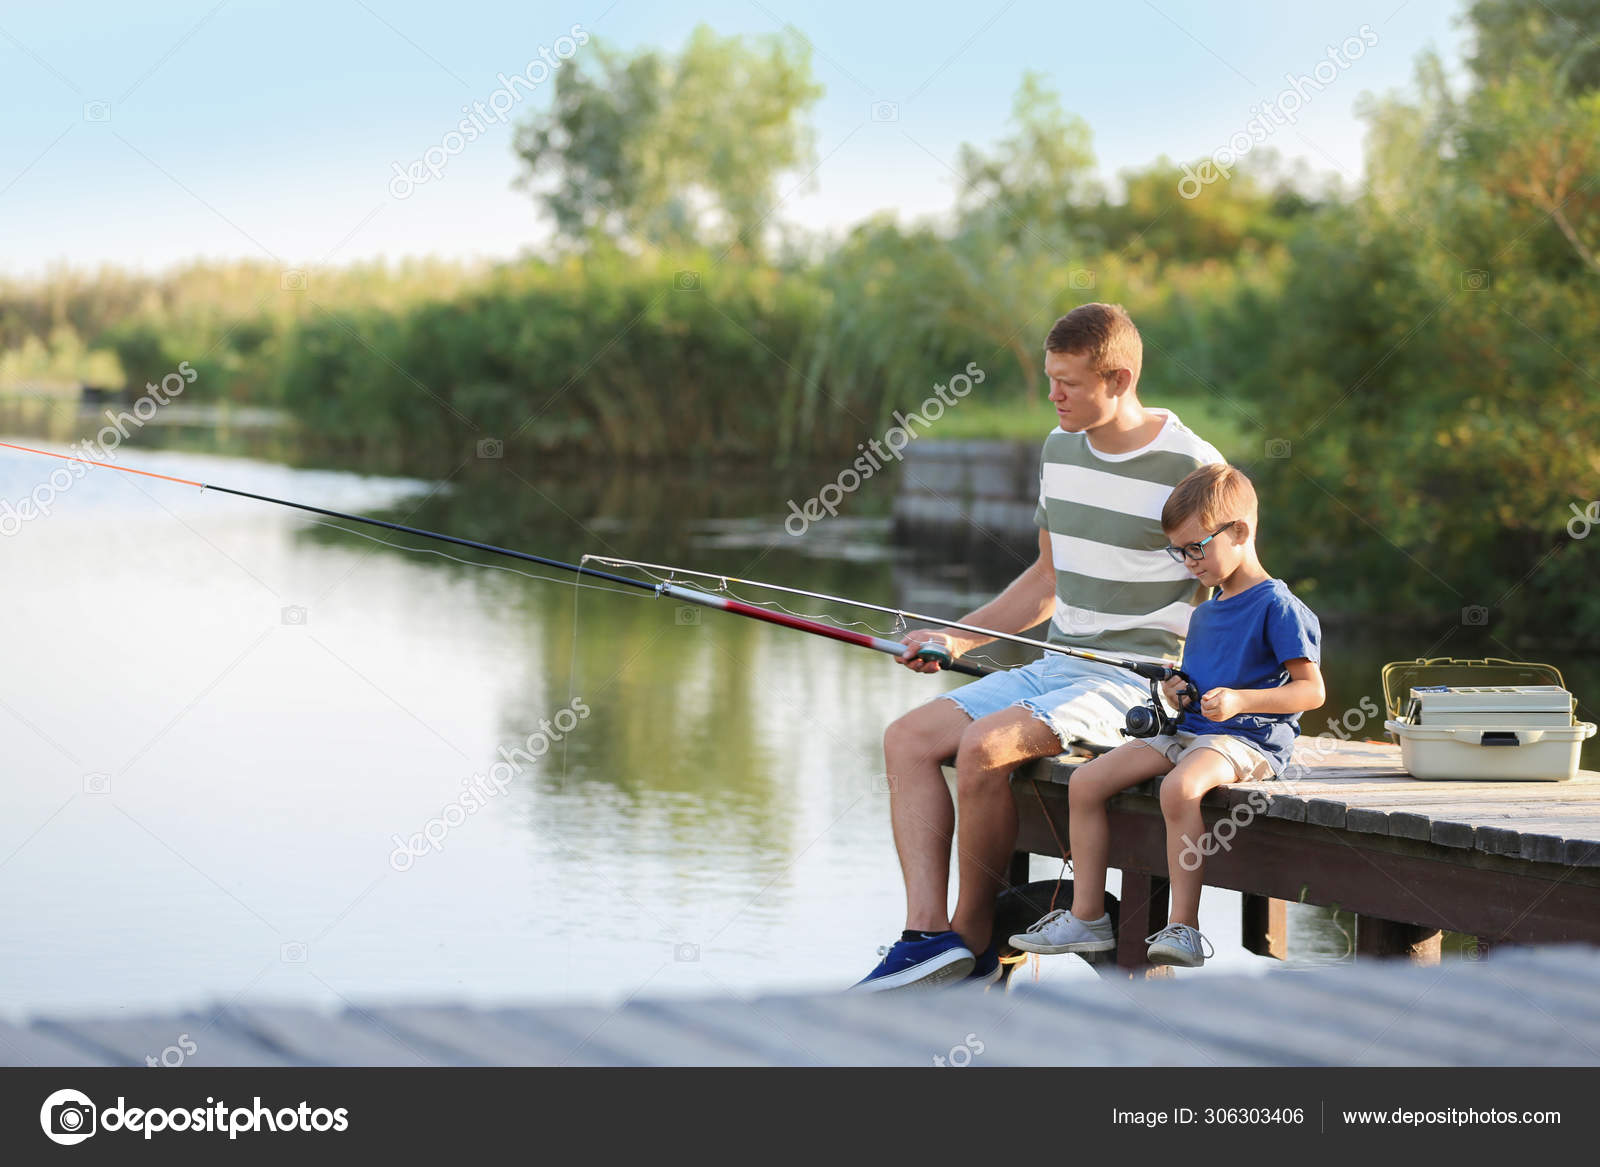 https://st4.depositphotos.com/16122460/30630/i/1600/depositphotos_306303406-stock-photo-dad-and-son-fishing-together.jpg